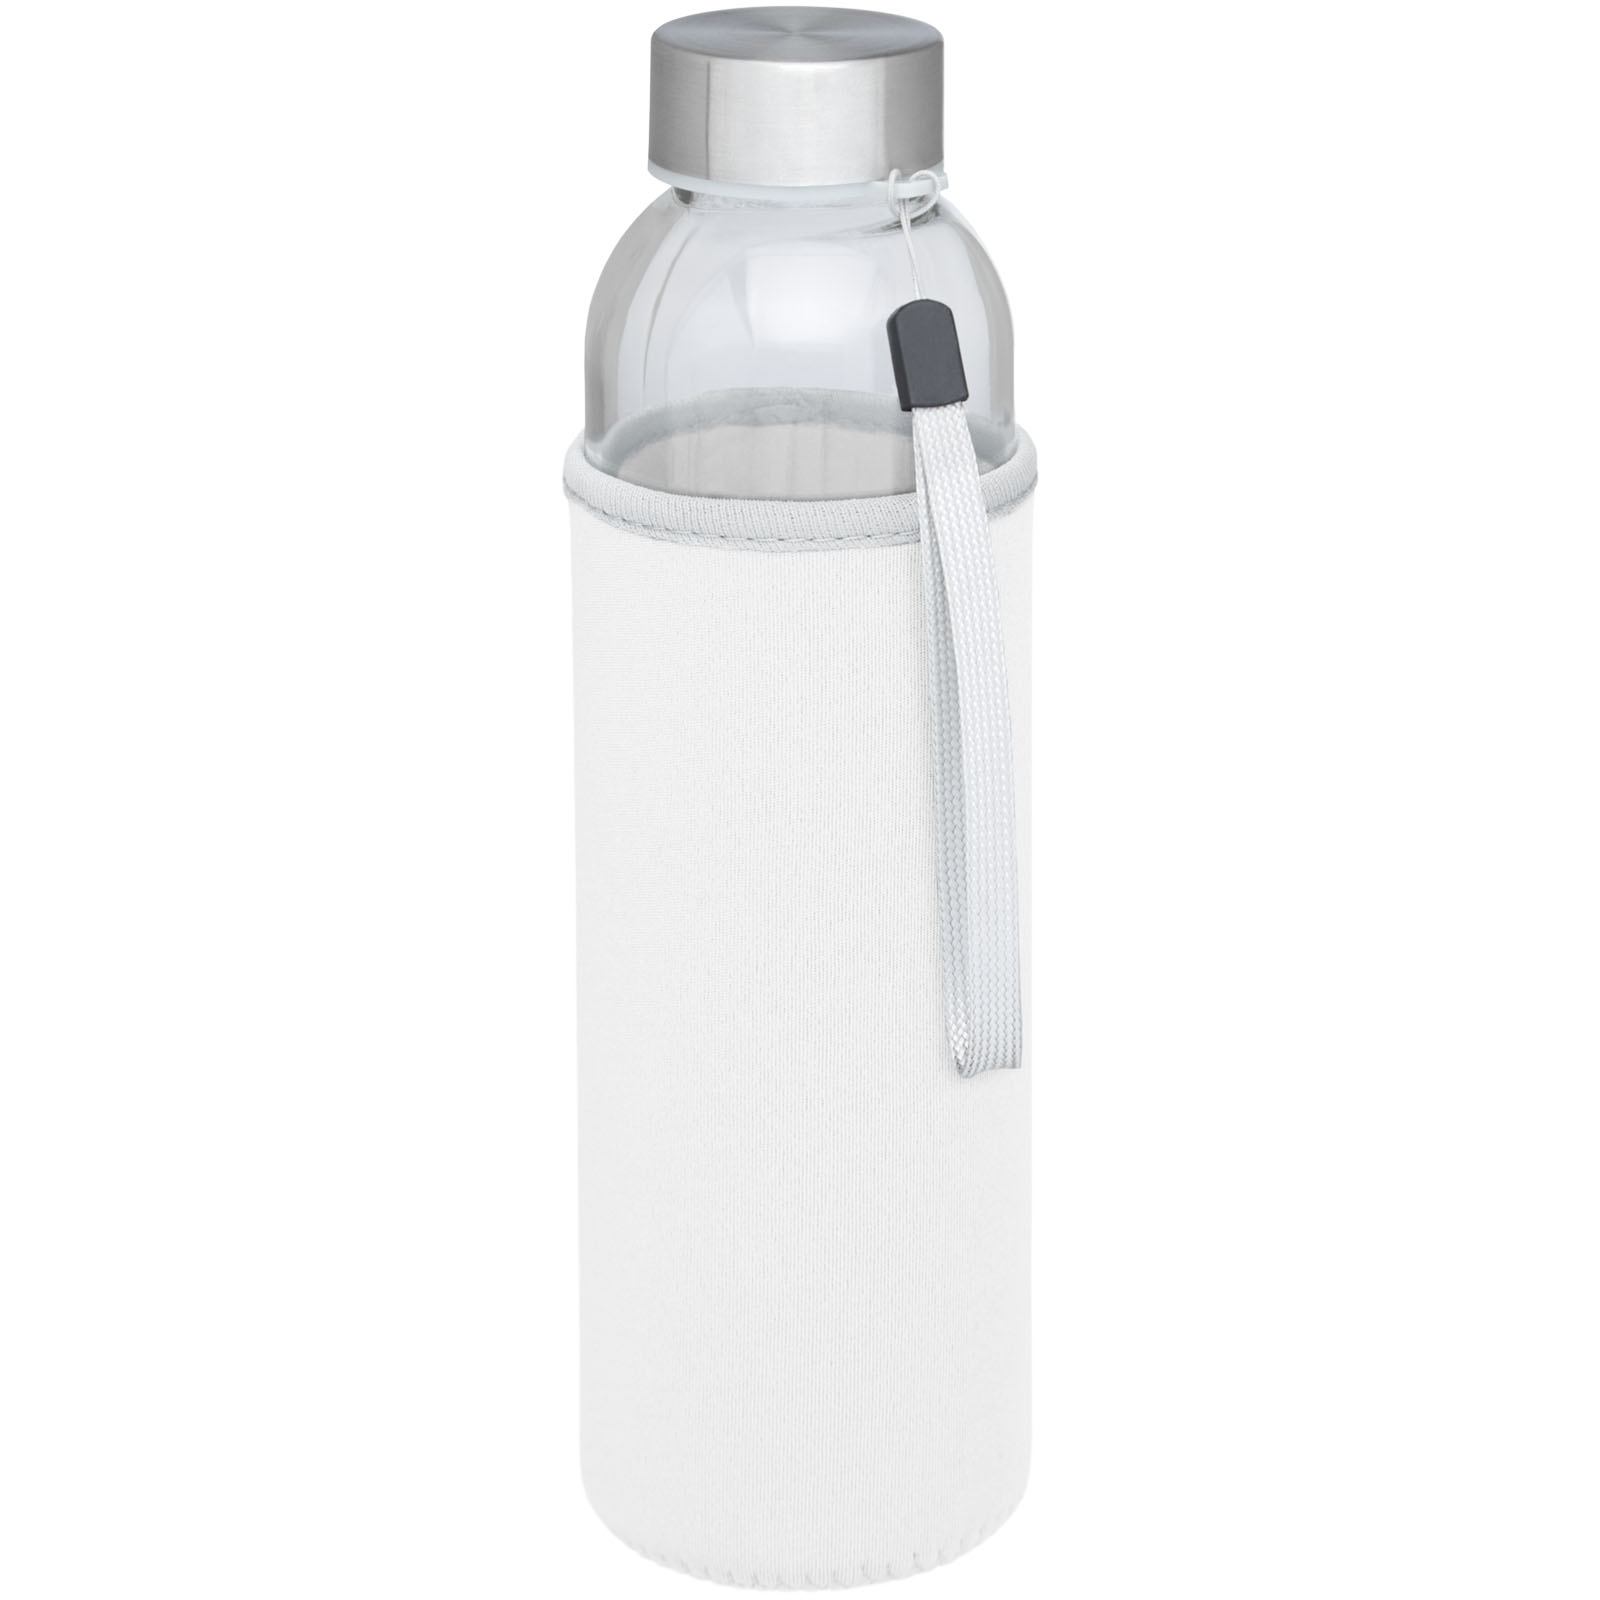 Advertising Water bottles - Bodhi 500 ml glass water bottle